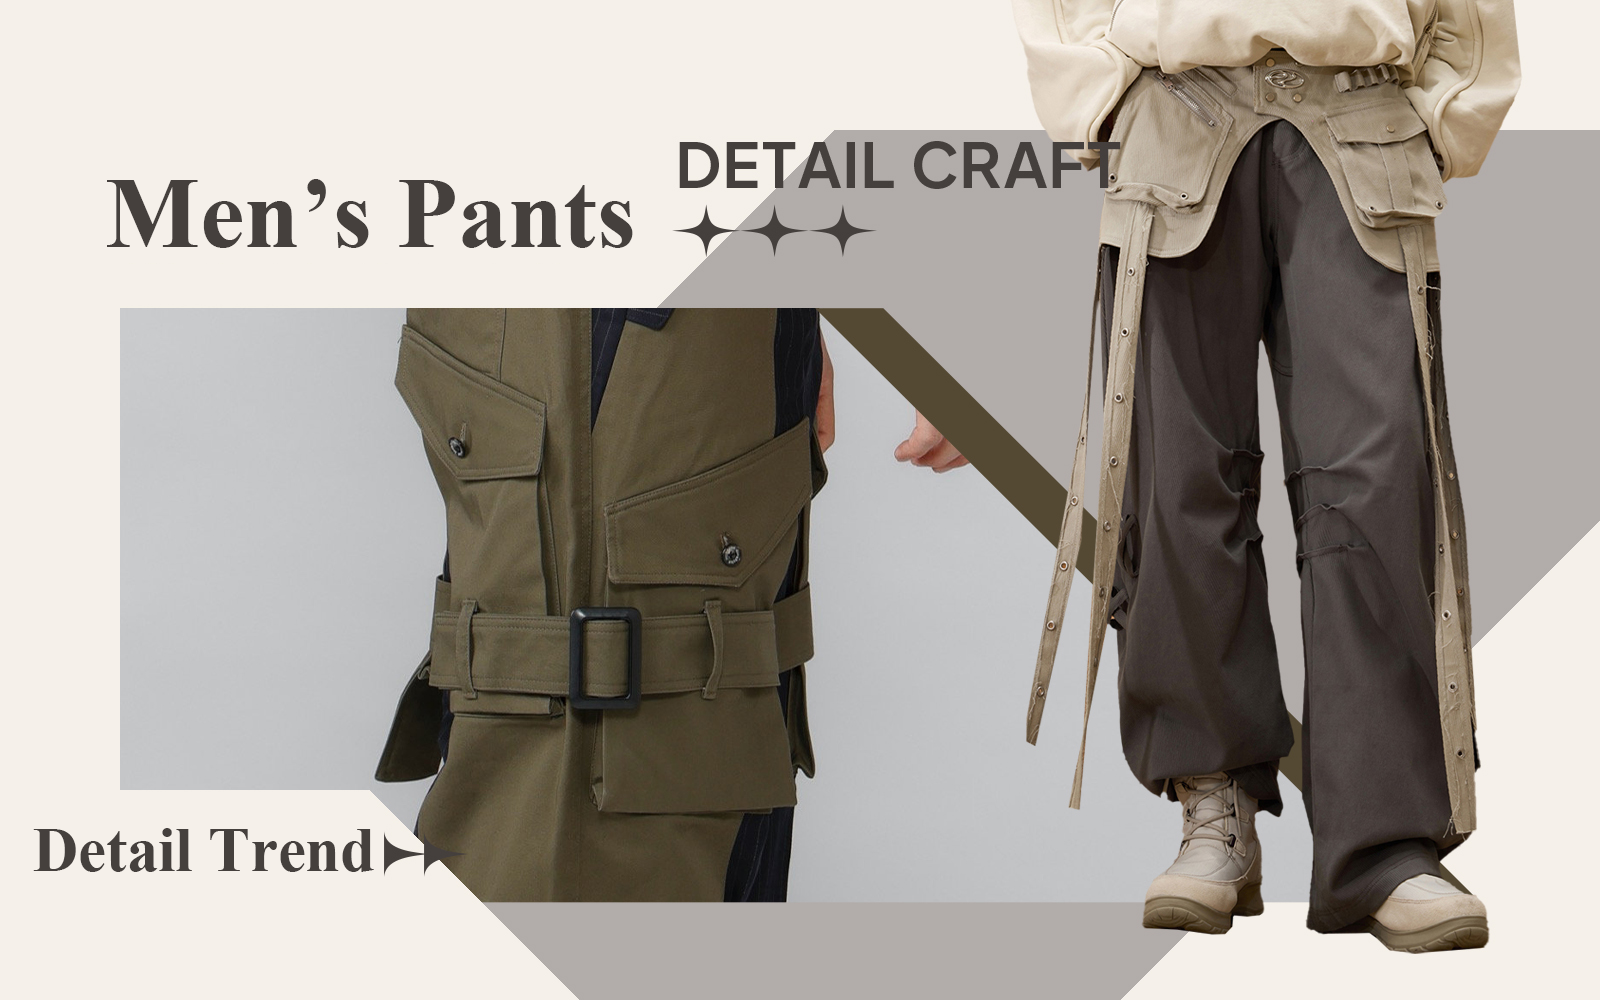 Trendy Design -- The Detail & Craft Trend for Men's Pants